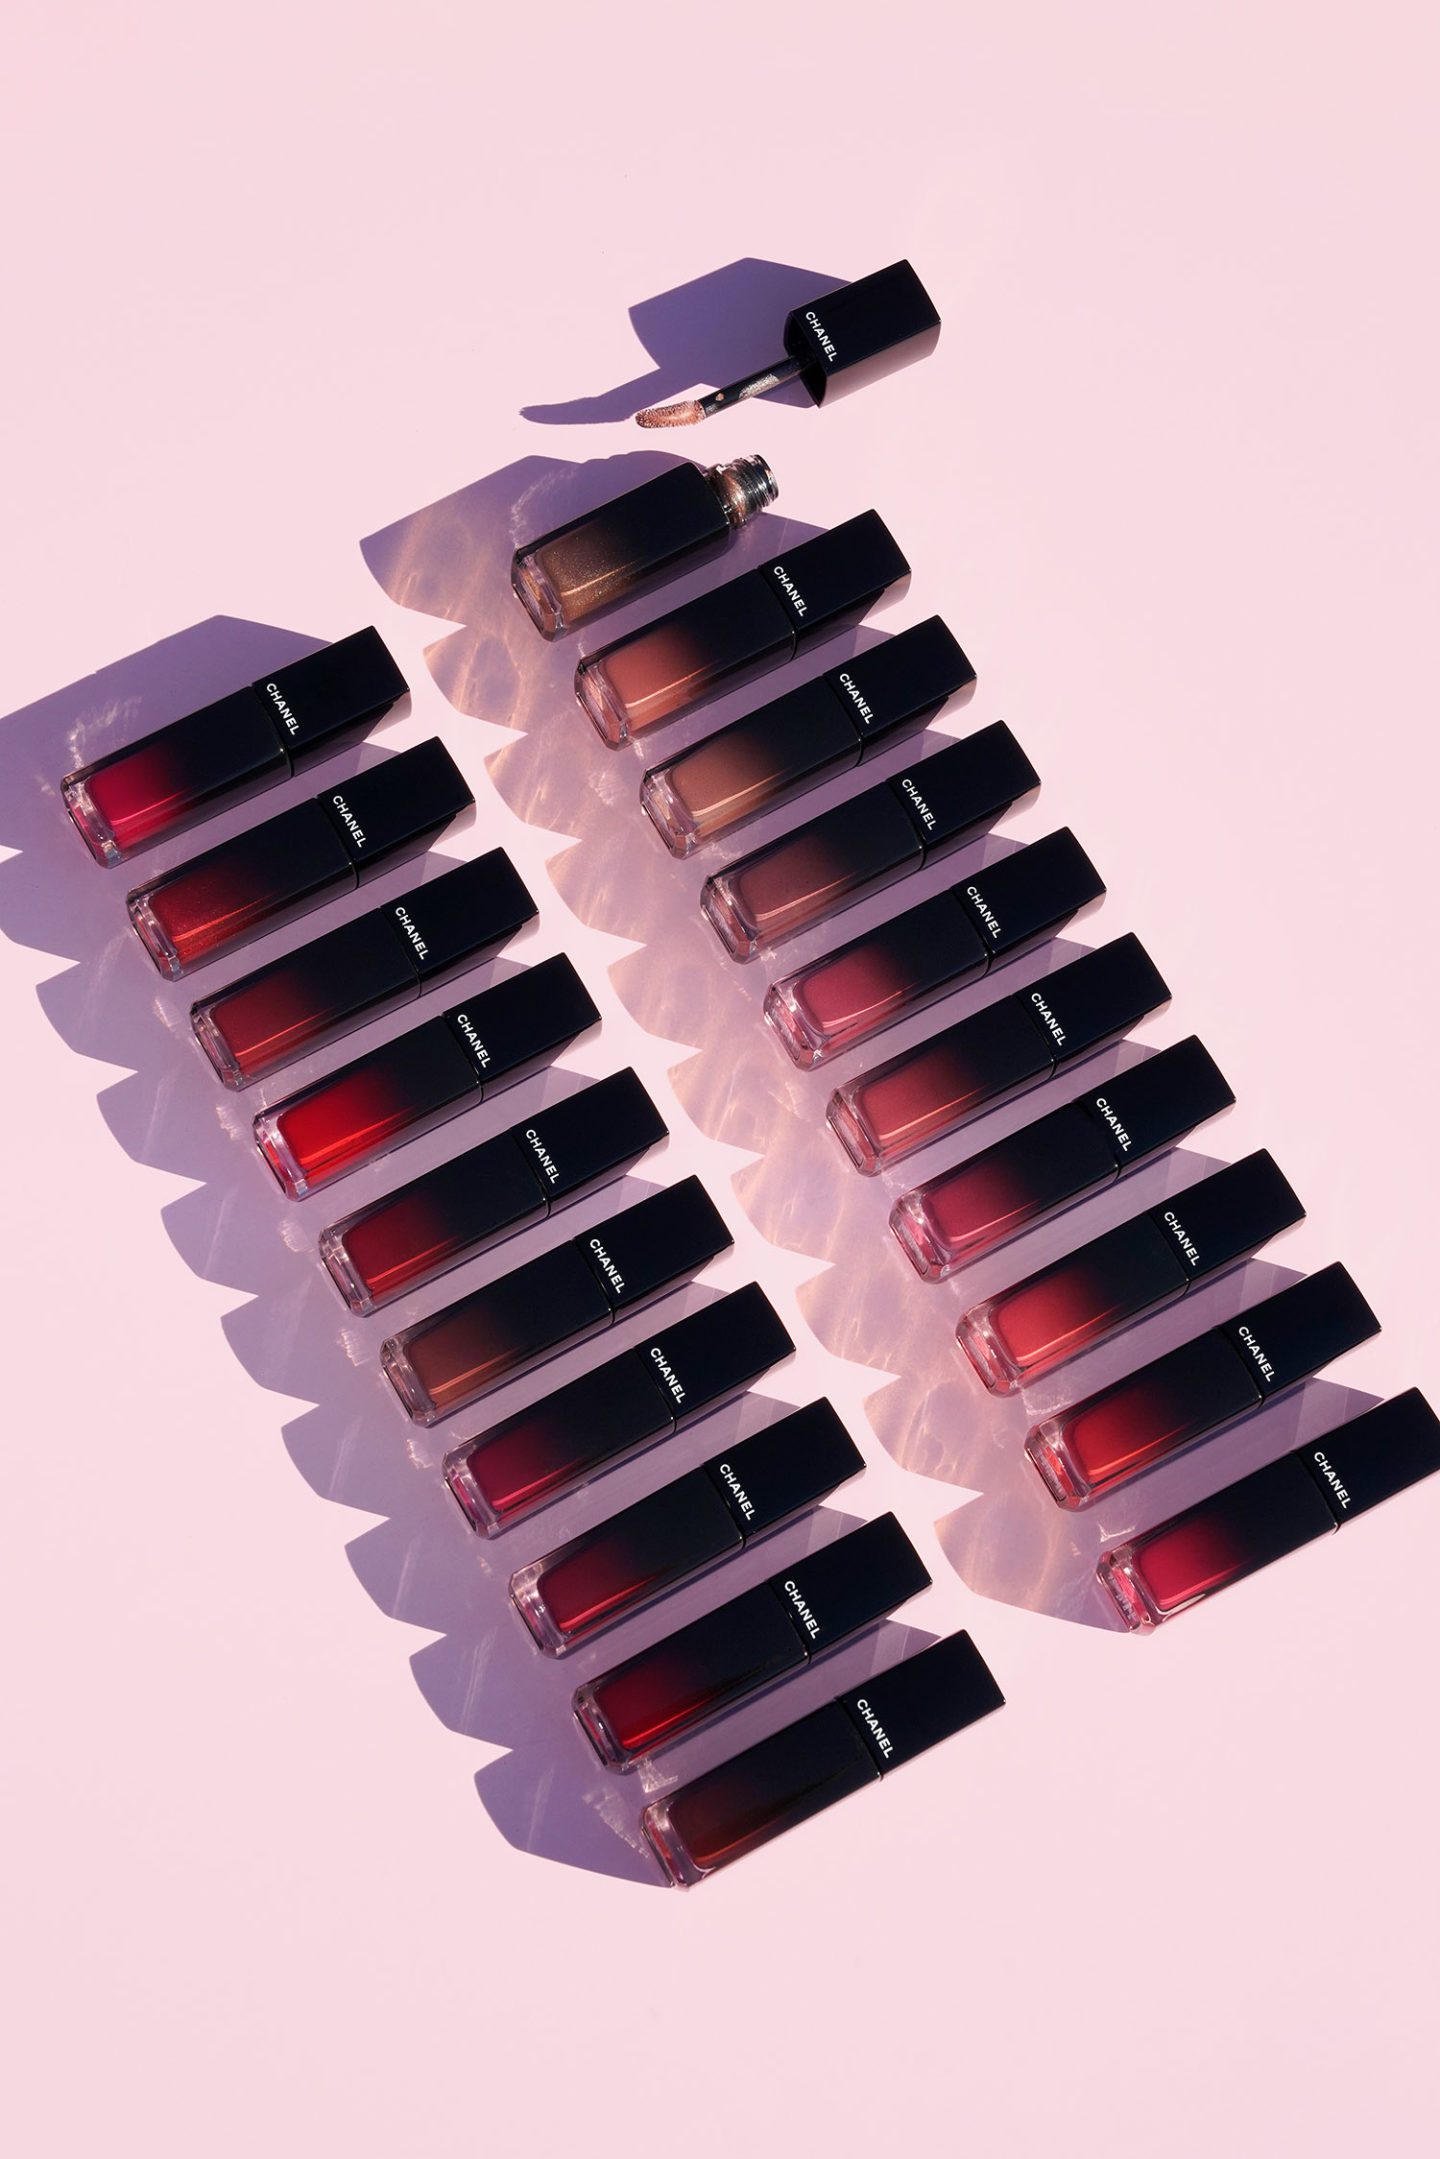 chanel lipstick # 57